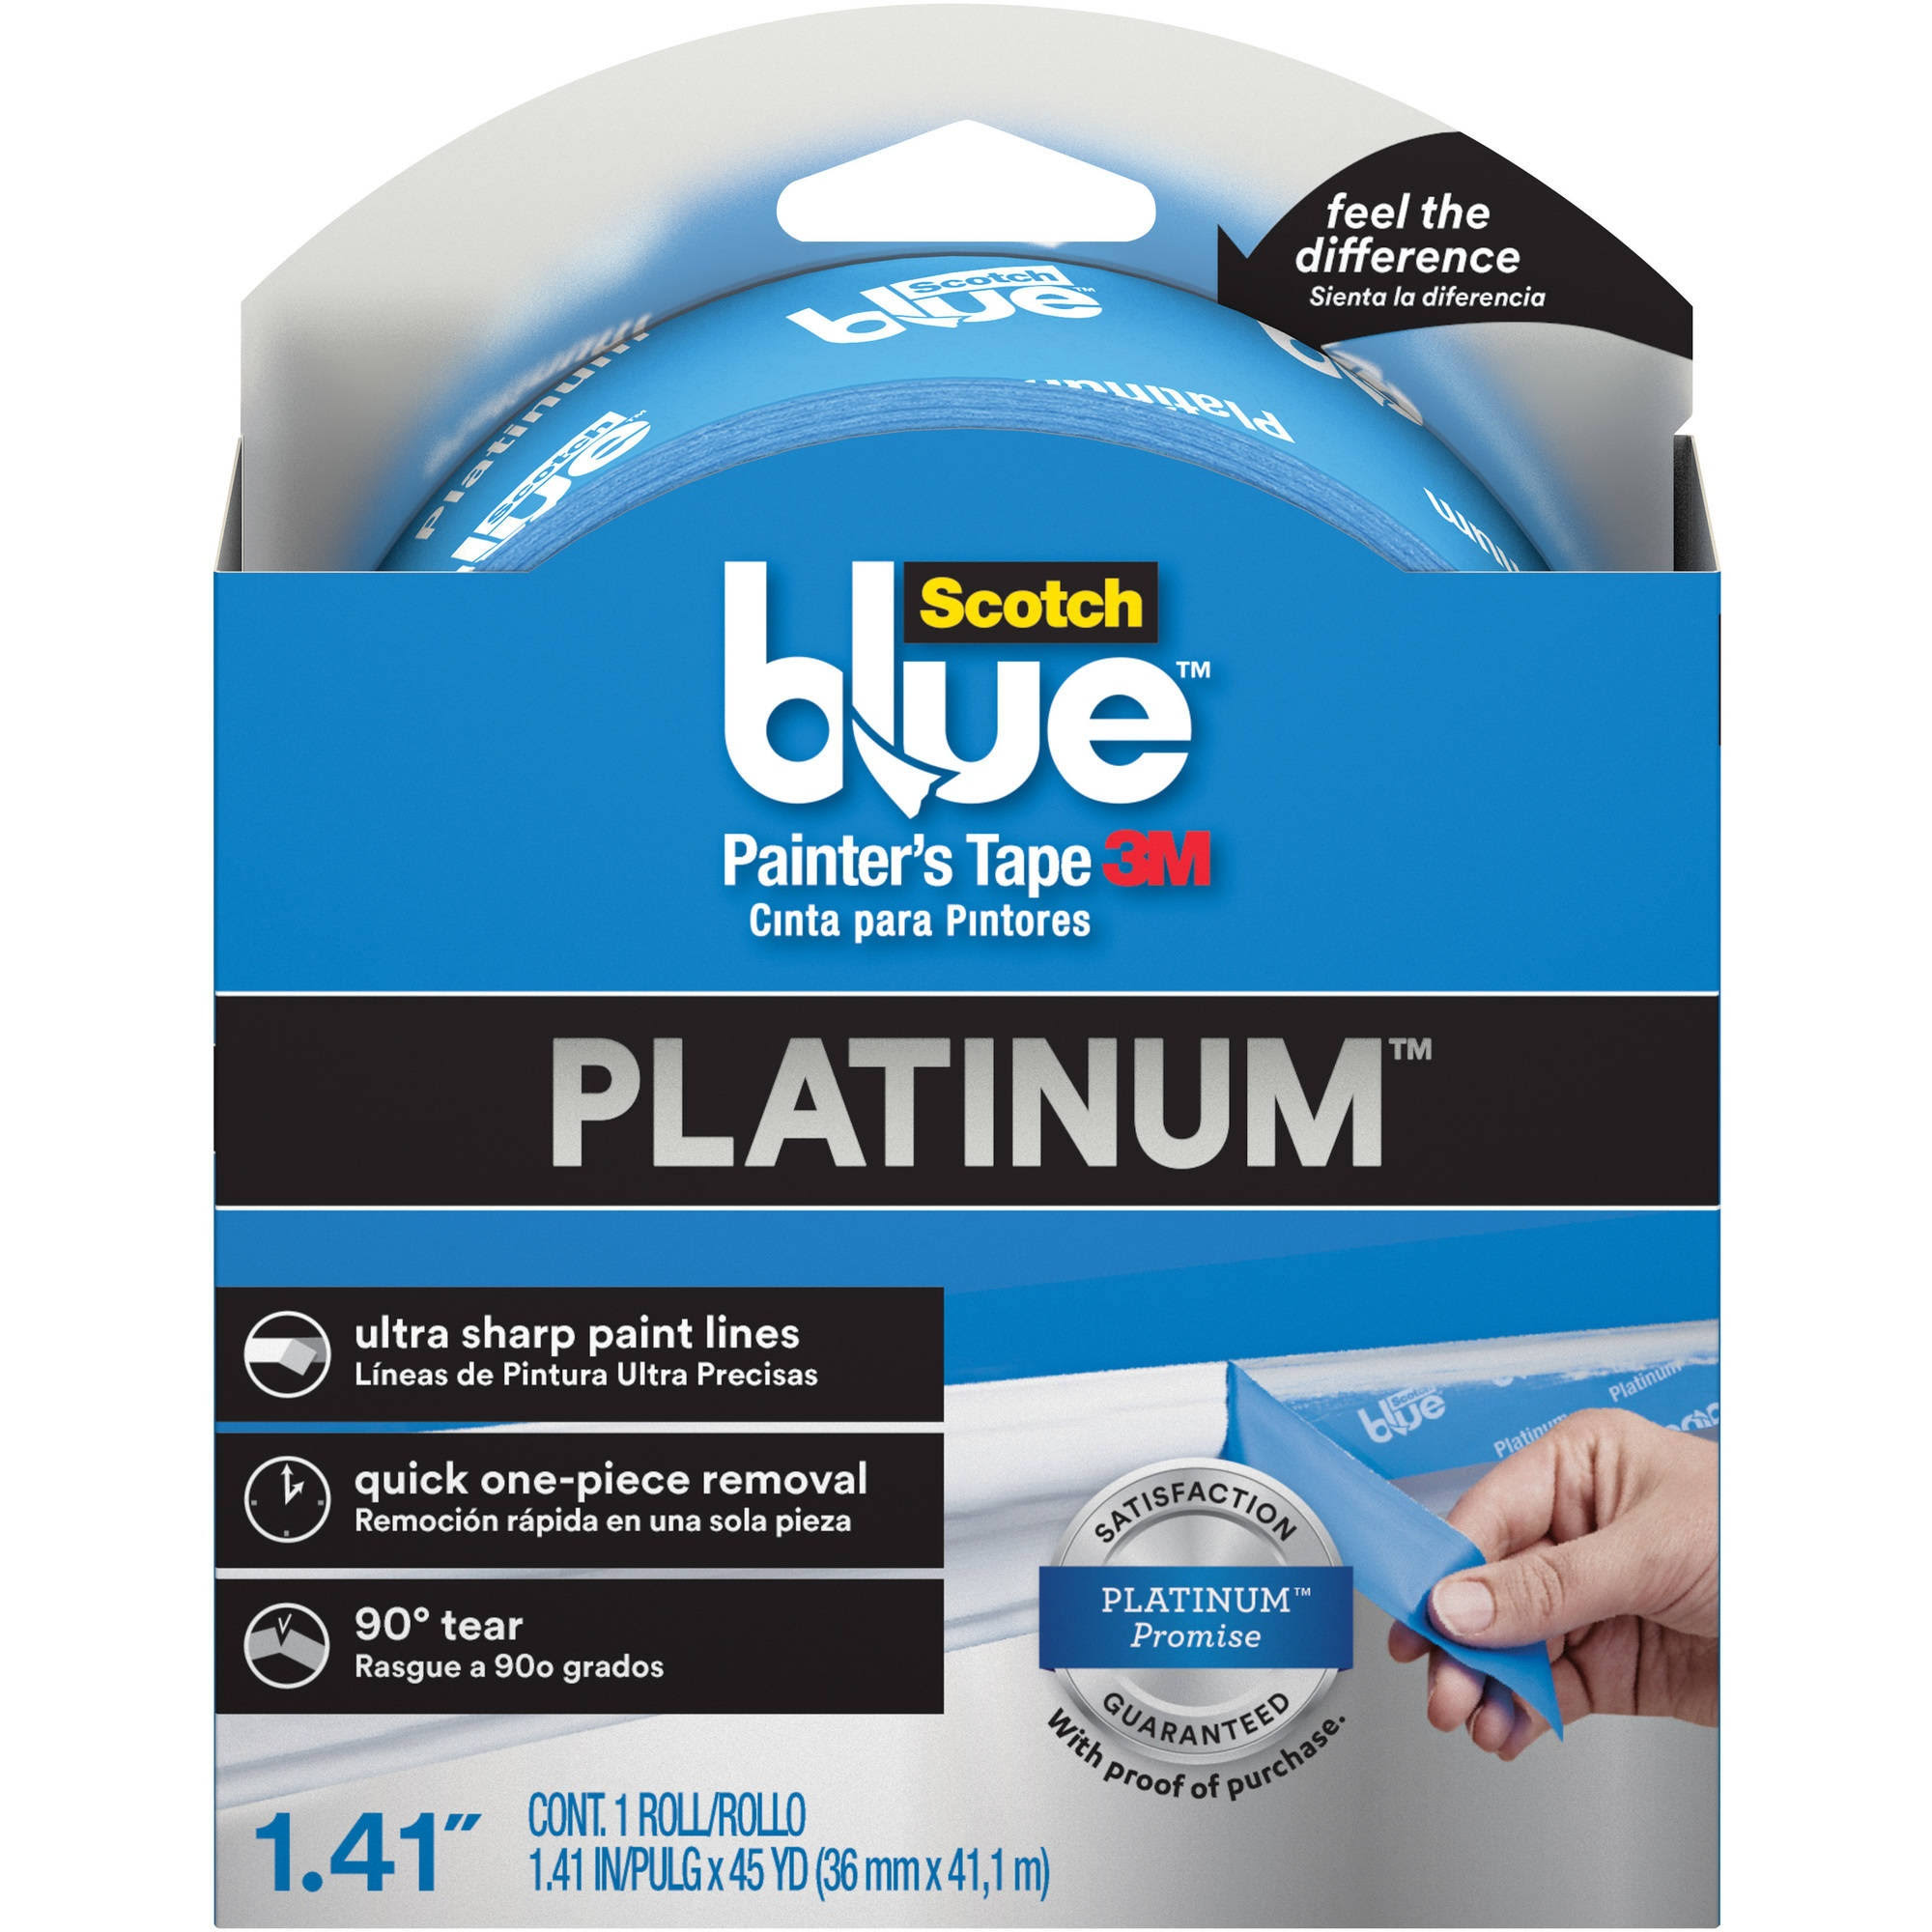 3M Scotch Platinum Painter's Tape - 1.41" x 45 Yards, Blue